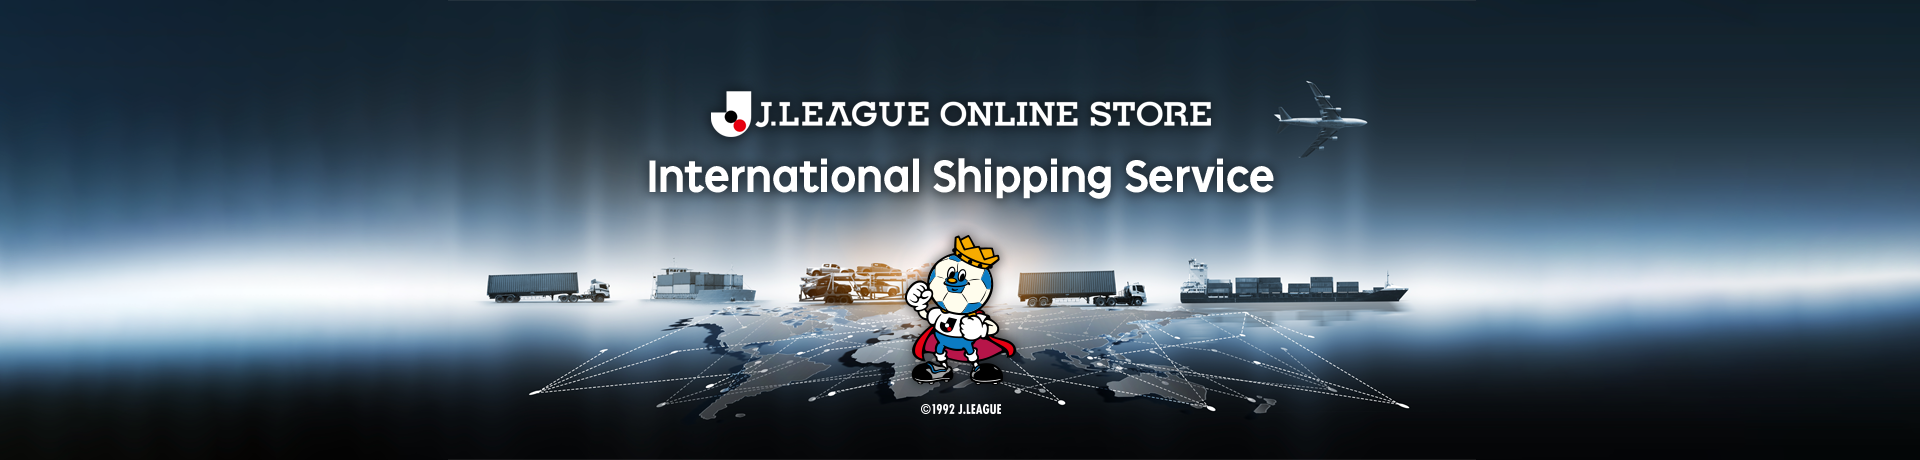 J.LEAGUE ONLINE STORE International Shipping  Service